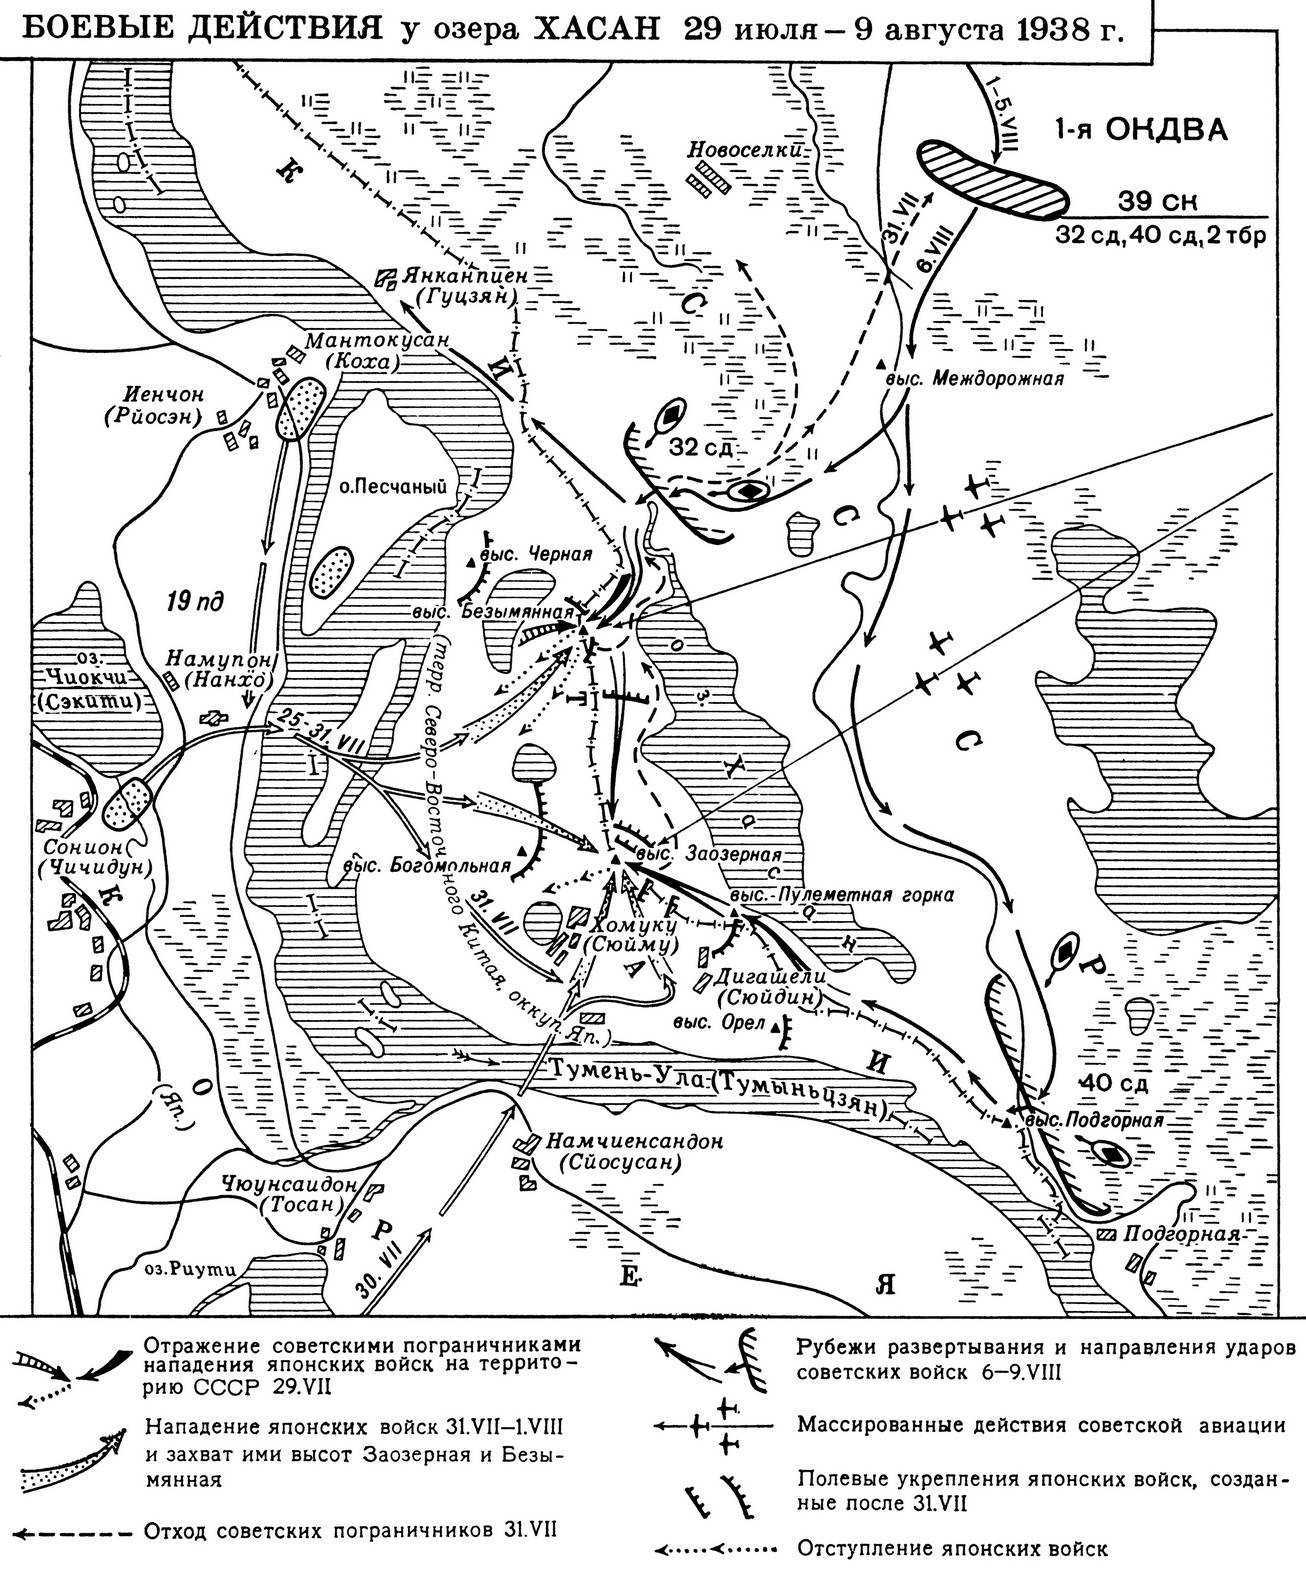 Озеро хасан дата. Конфликт у озера Хасан 1938 карта. Сражение на озере Хасан 1938 карта. Бои у озера Хасан. Бои на озере Хасан 1938.